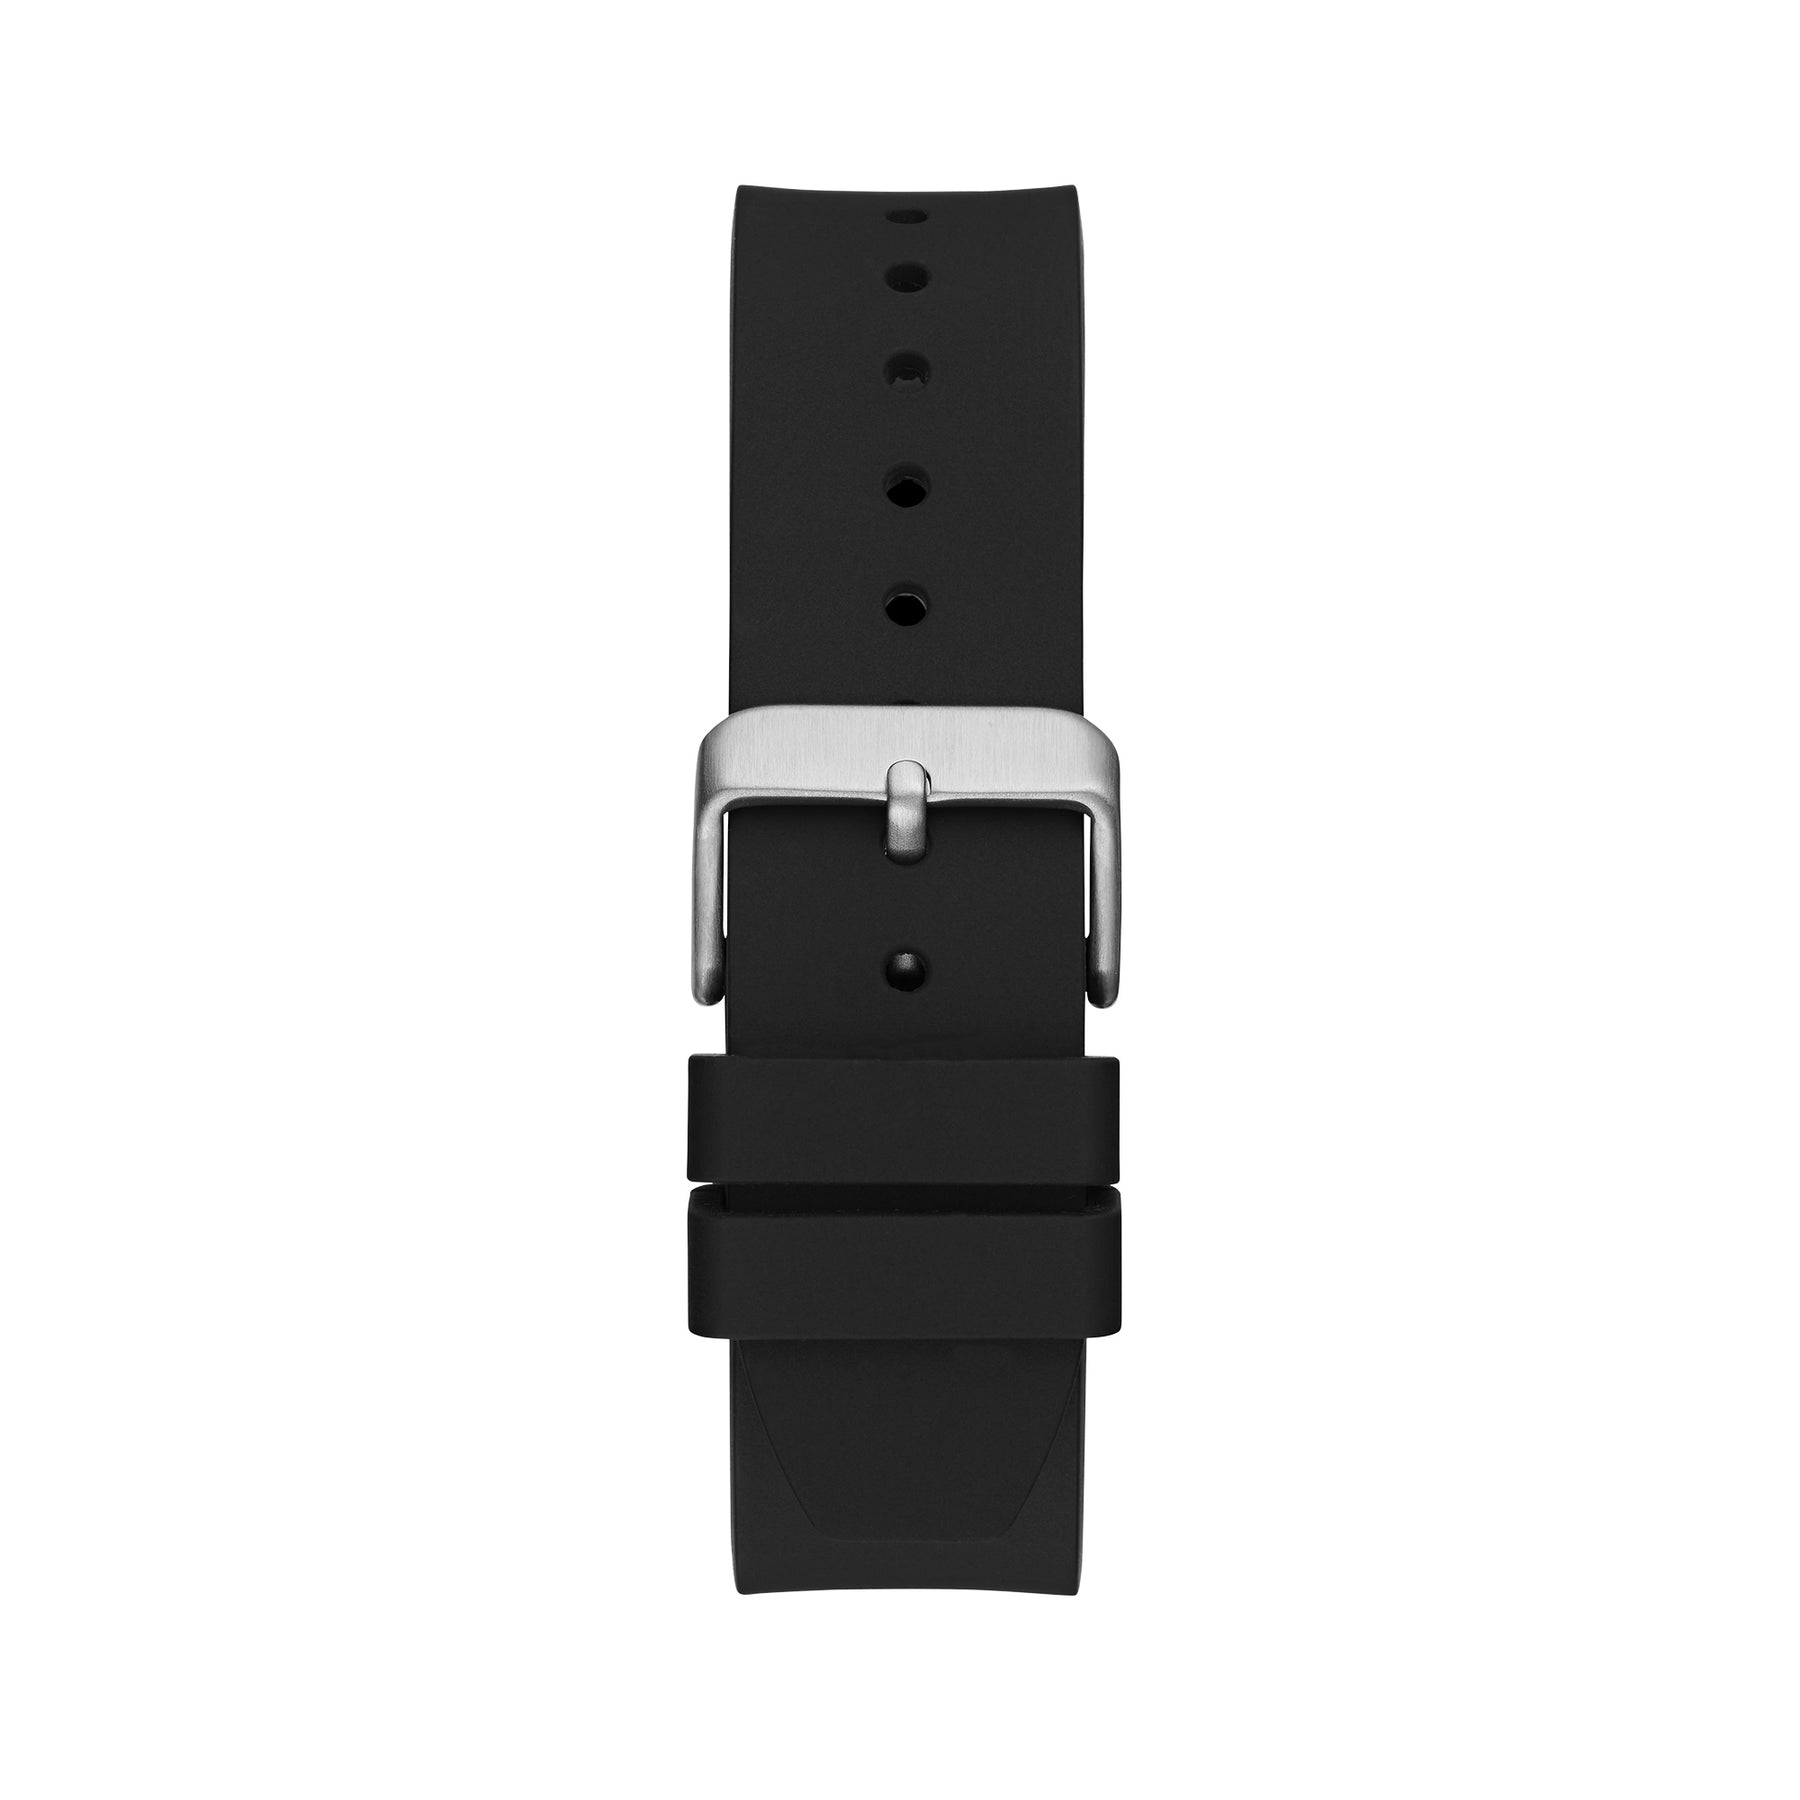 Guess Men's 42mm Black Silver Tone Quartz Watch GW0663G1